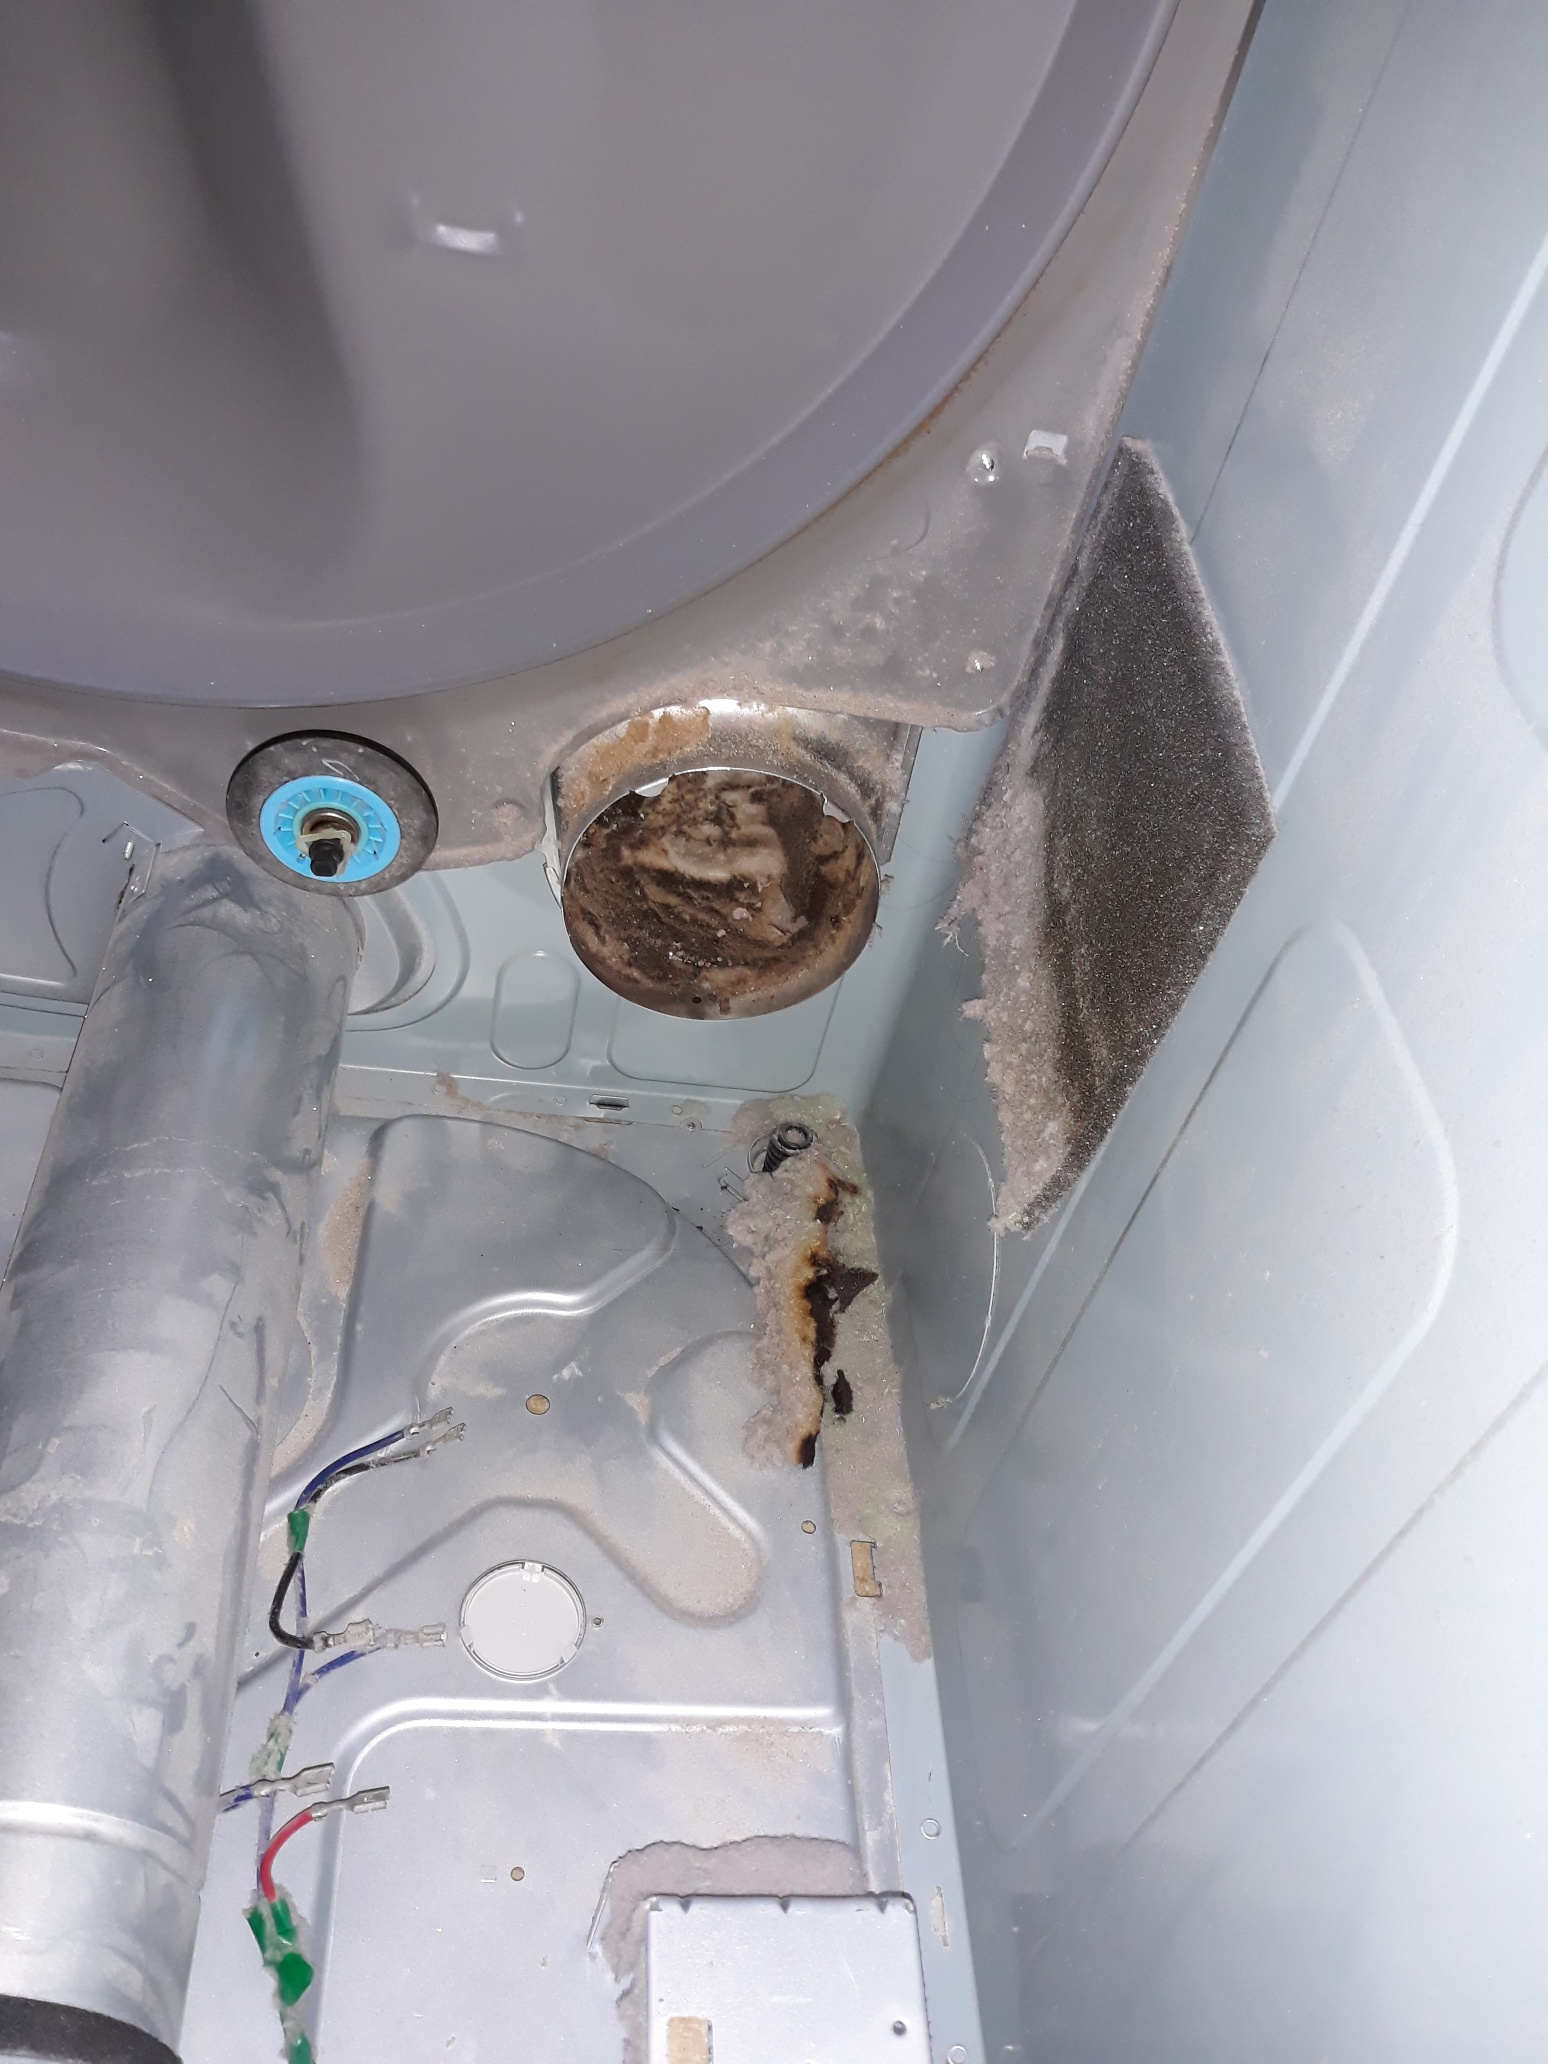 appliance repair dryer repair repaired by replacement of the broken heating element n hubb st coleman fl 33521